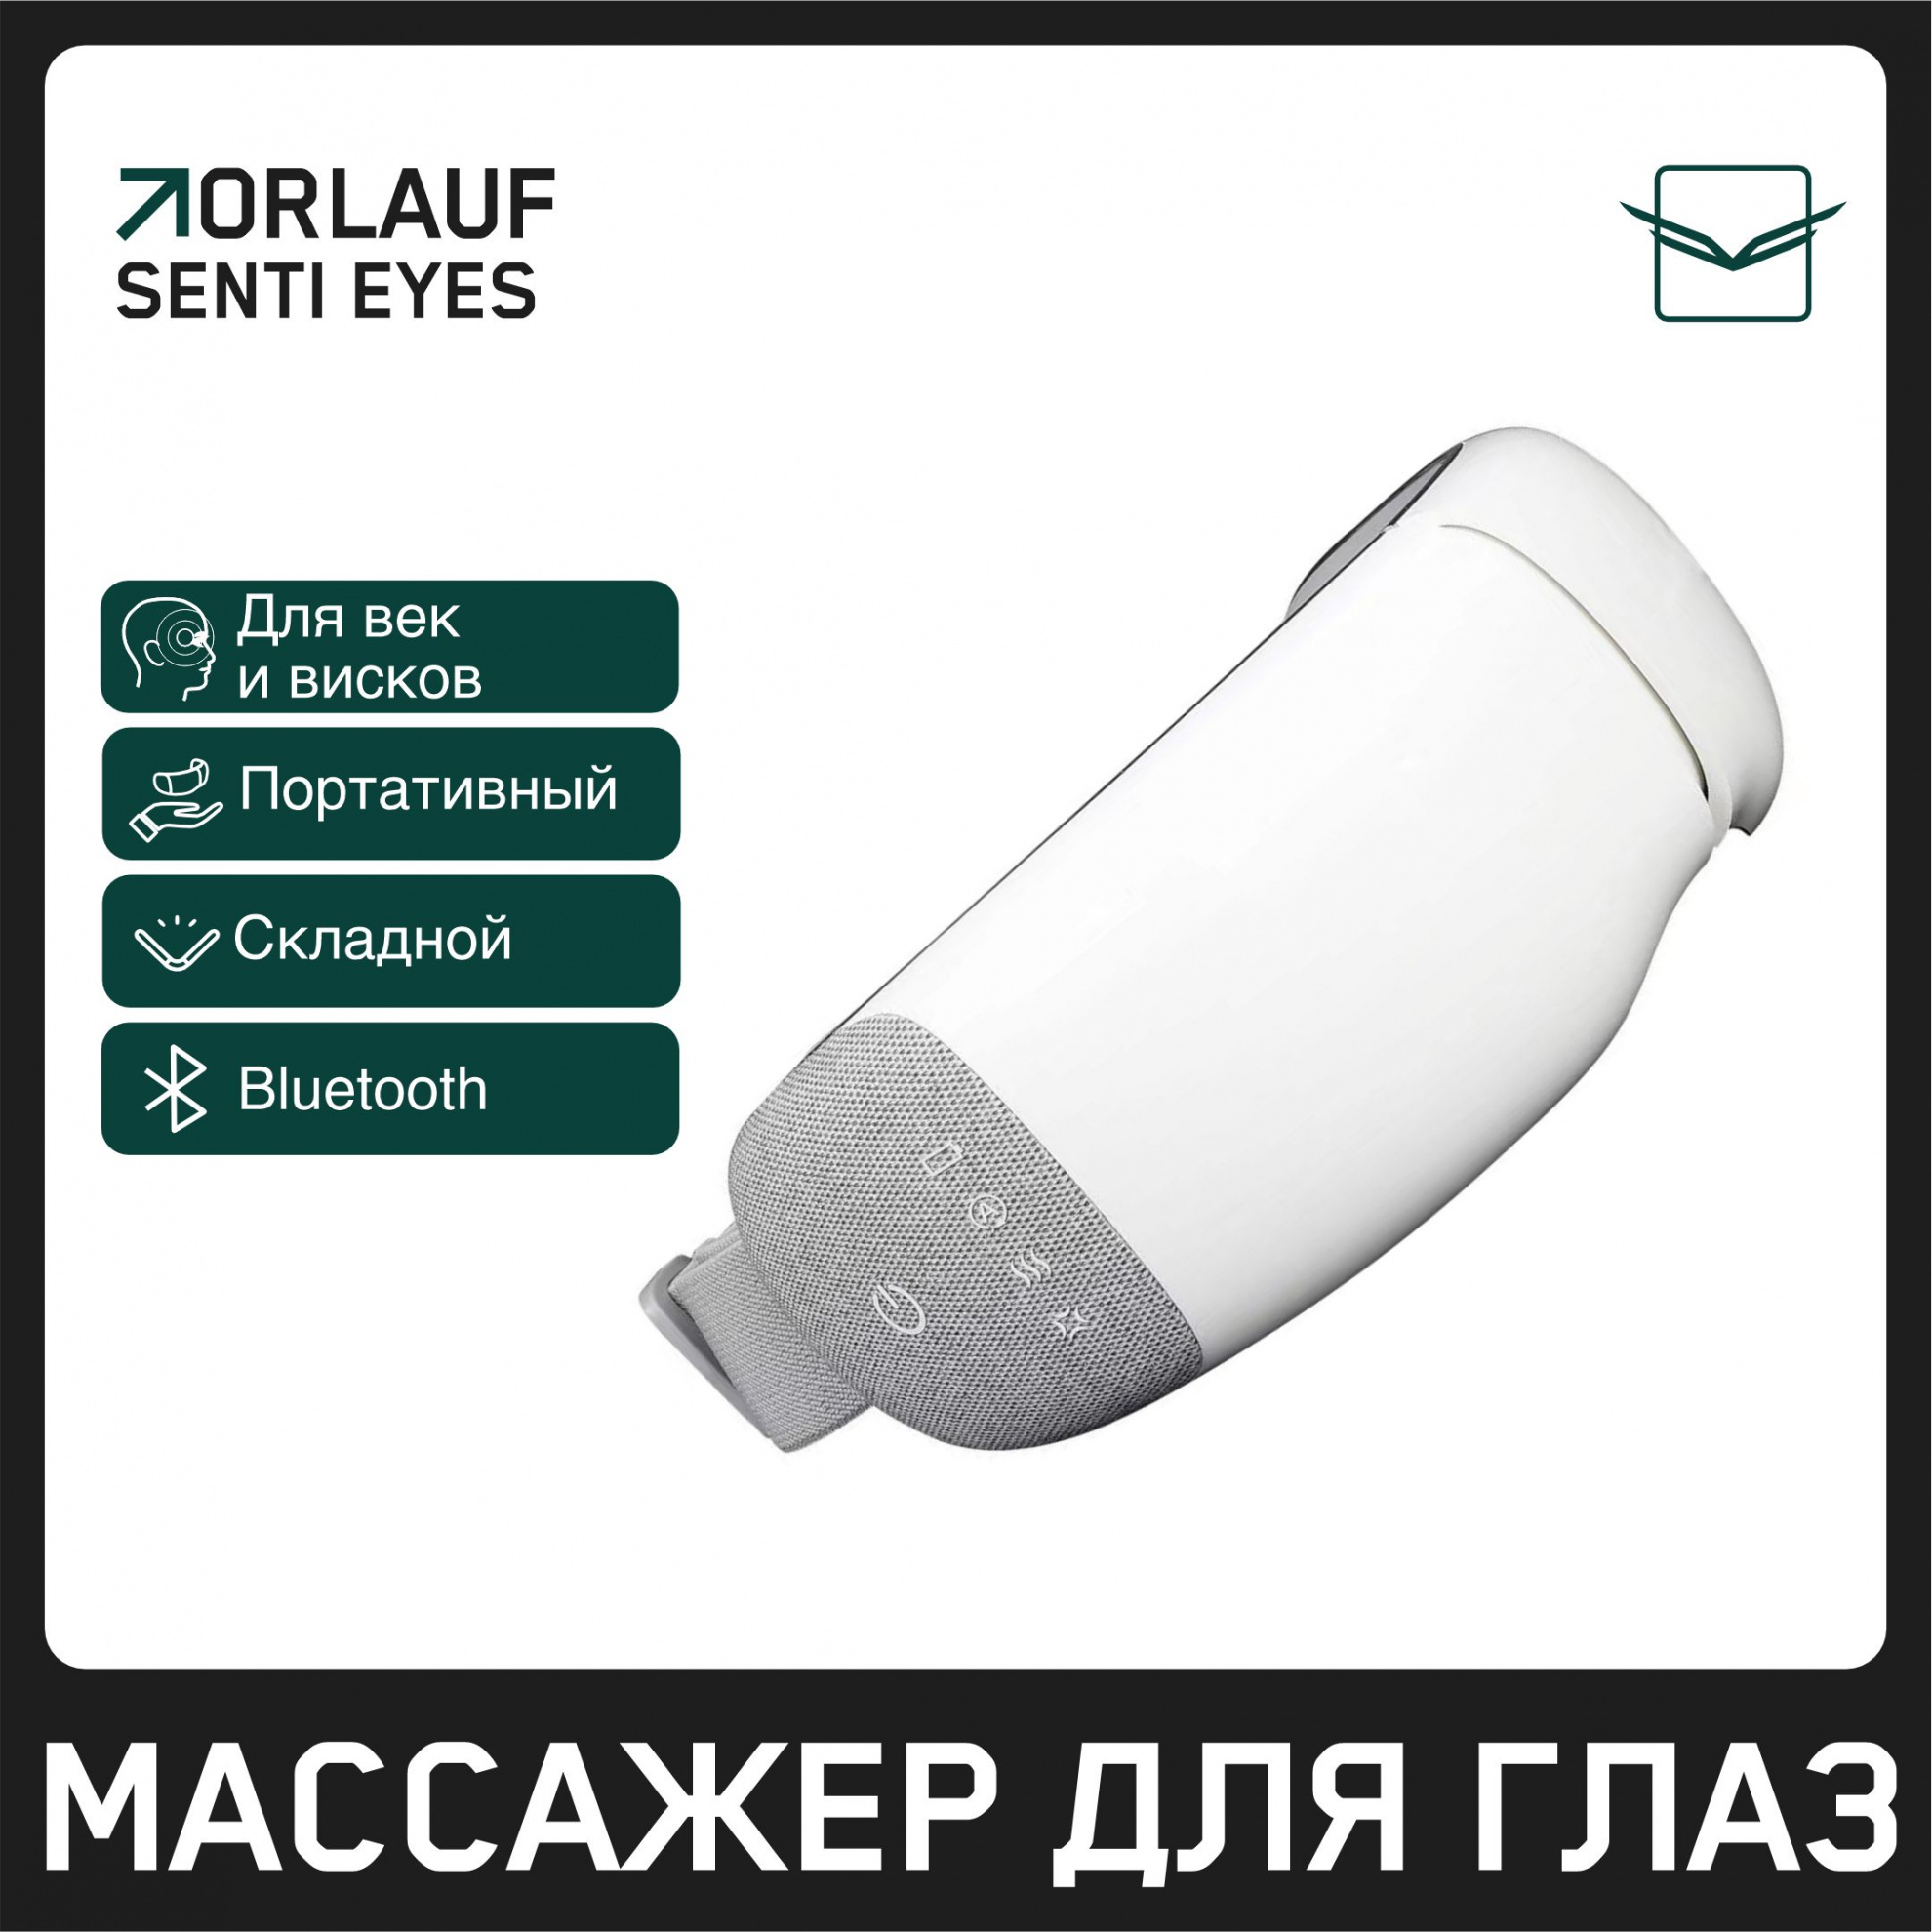 Senti Eyes в Омске по цене 9400 ₽ в категории массажеры Orlauf